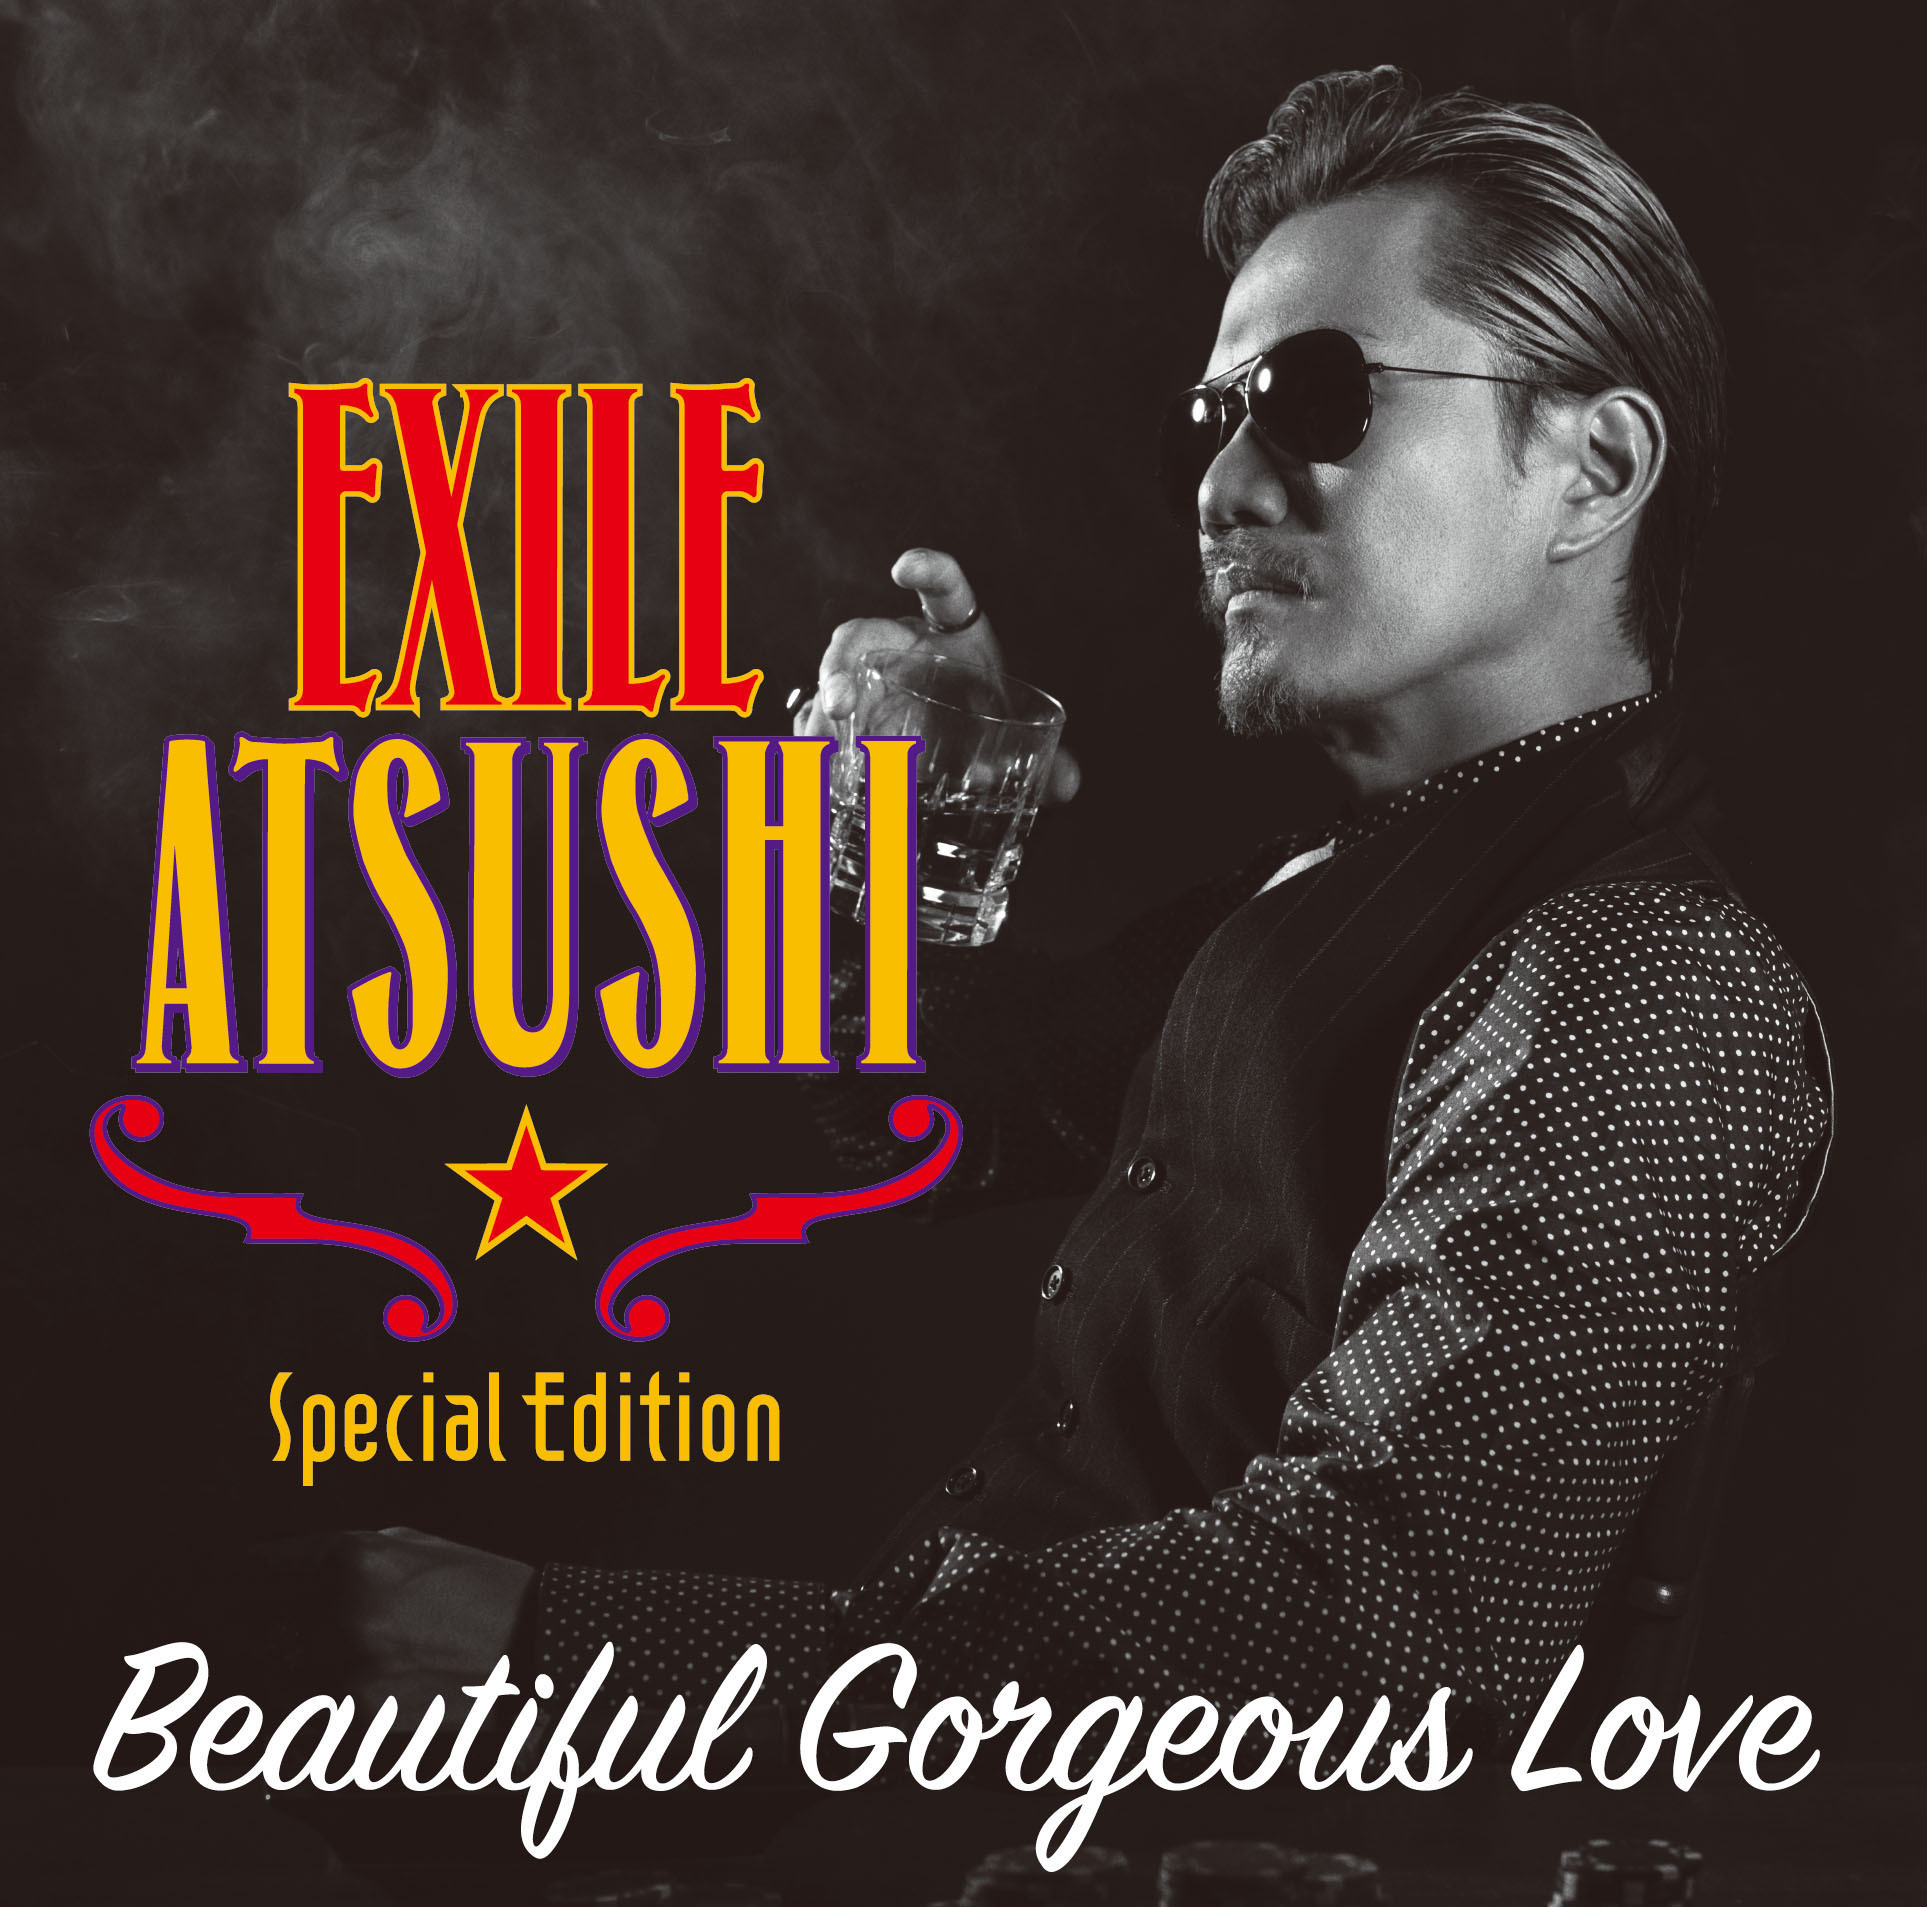 Exile Atsushi ライブ特番 Exile Atsushi Premium Live のダイジェスト映像を公開 Spice エンタメ特化型情報メディア スパイス